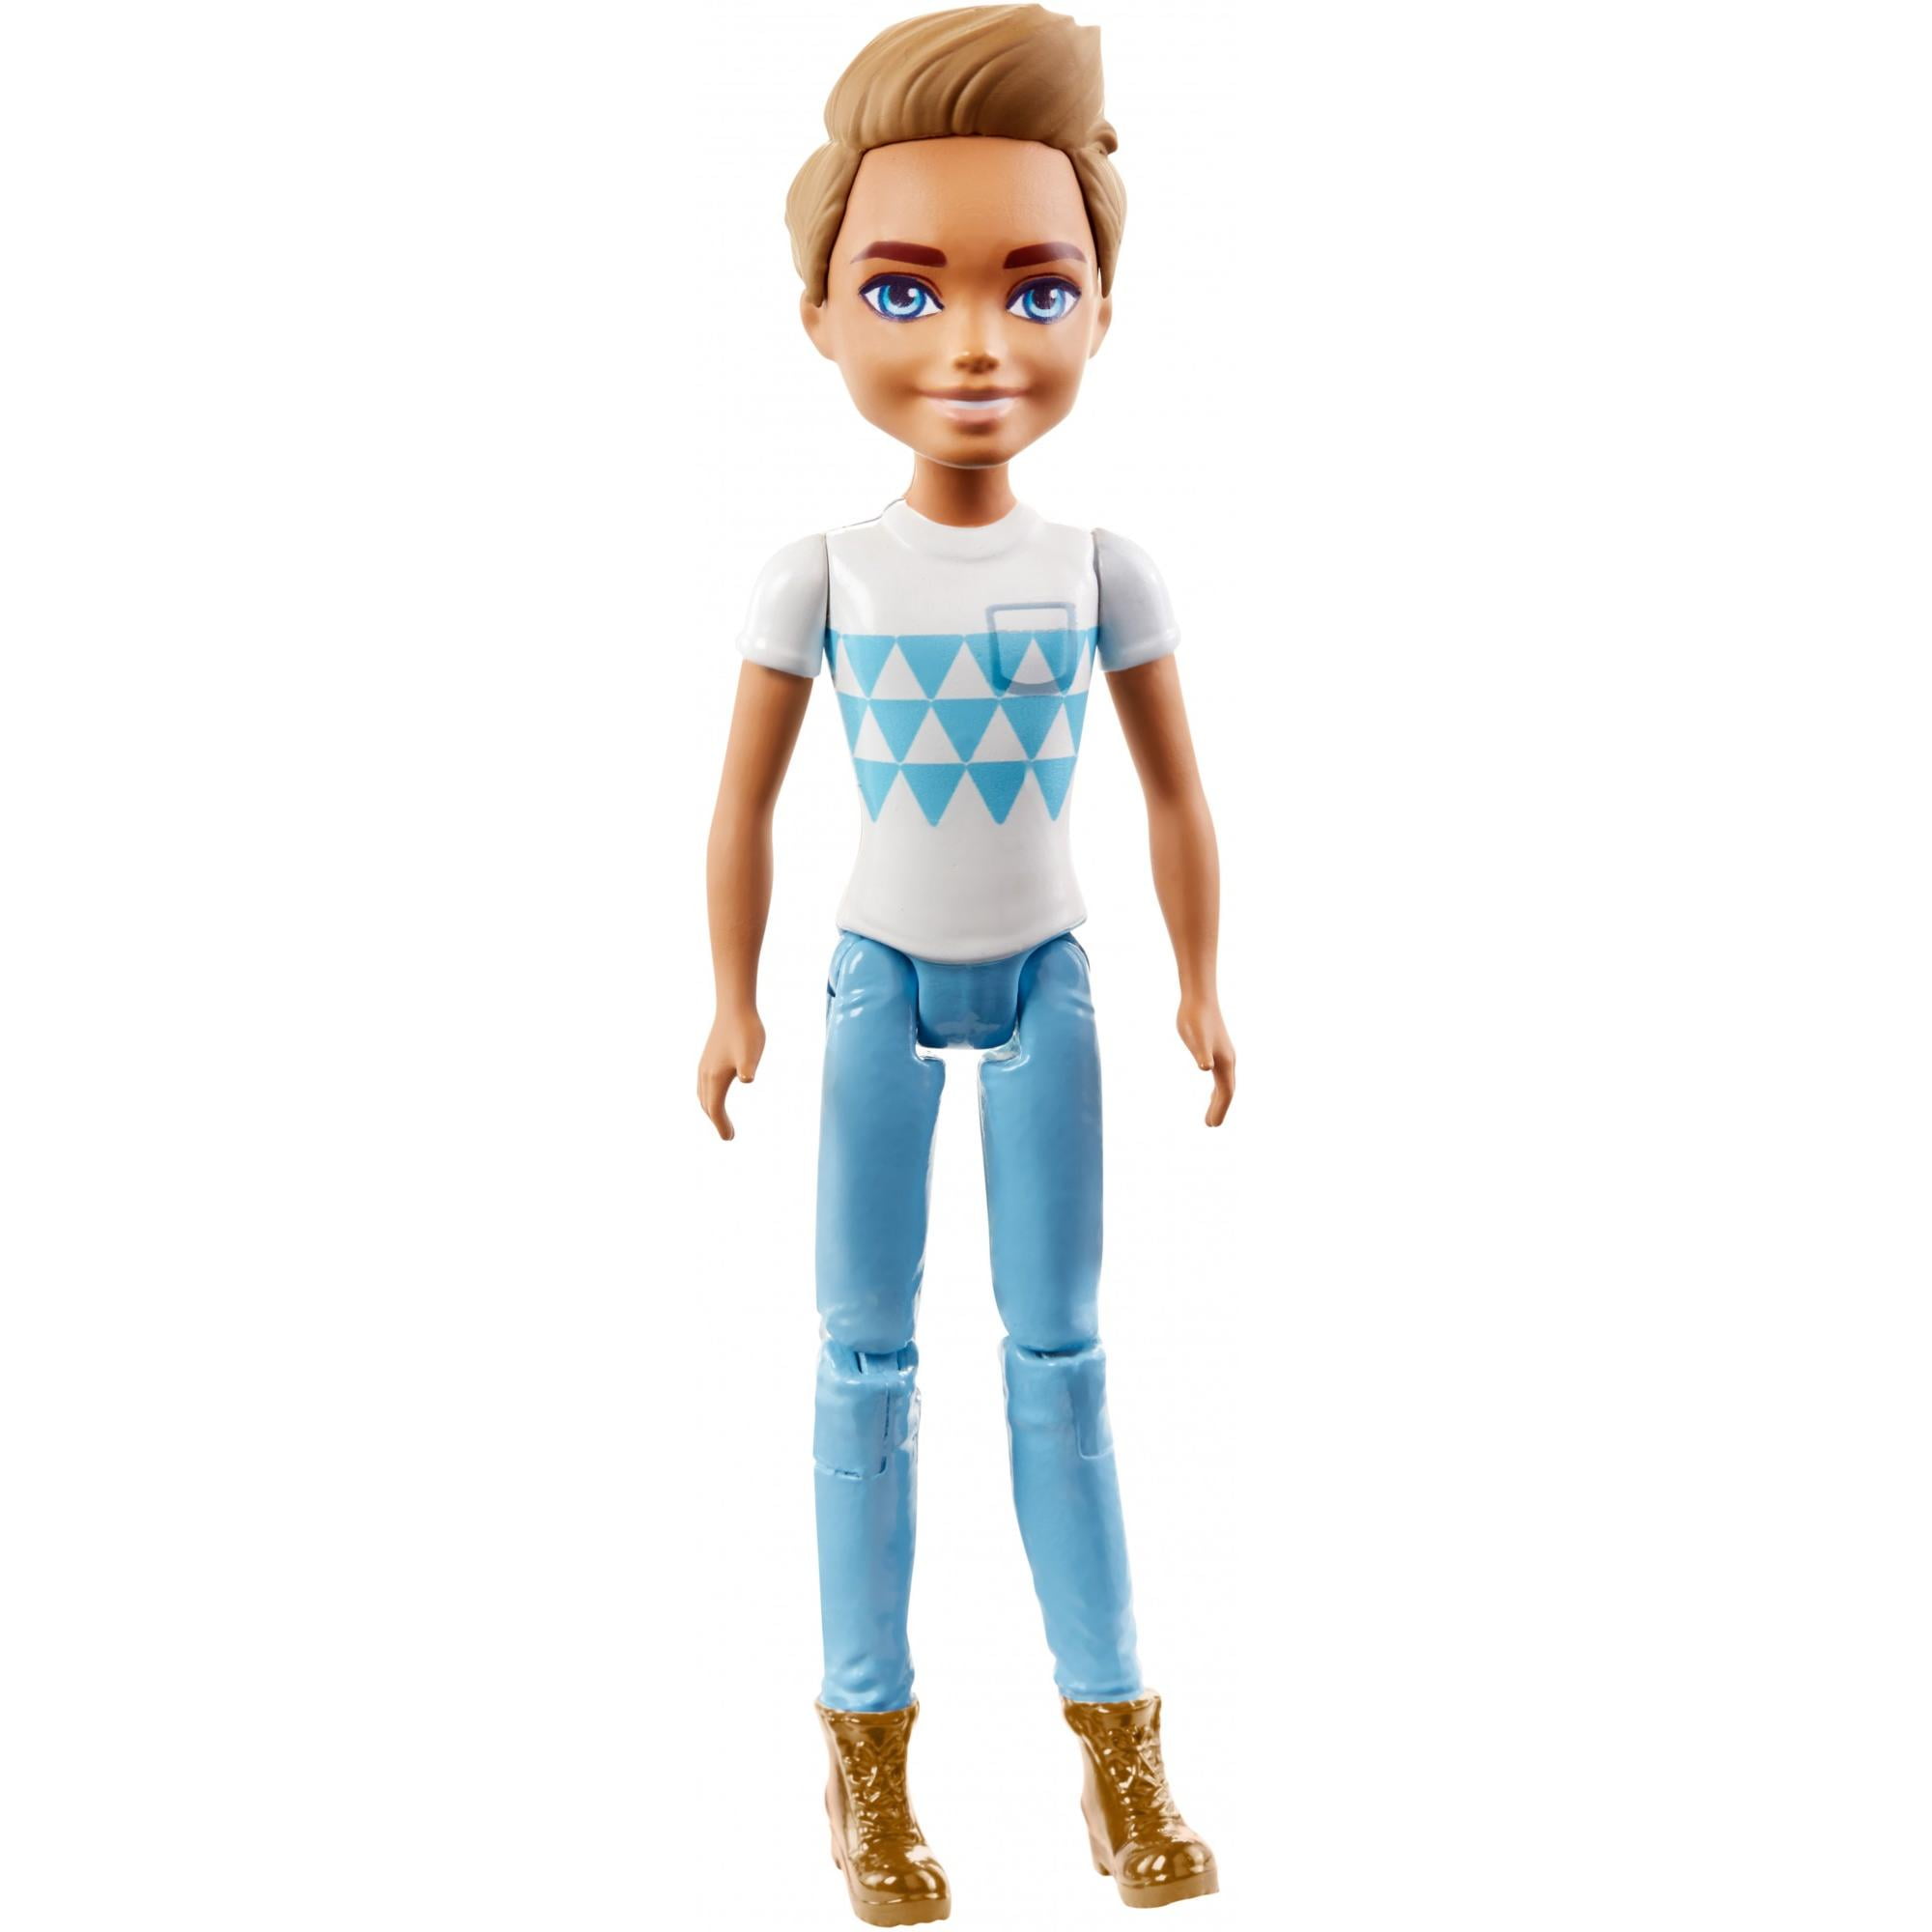 Barbie Millicent Roberts Pinstripe Power Doll  Extra Fashion Mattel #19791  1997 - Walmart.com